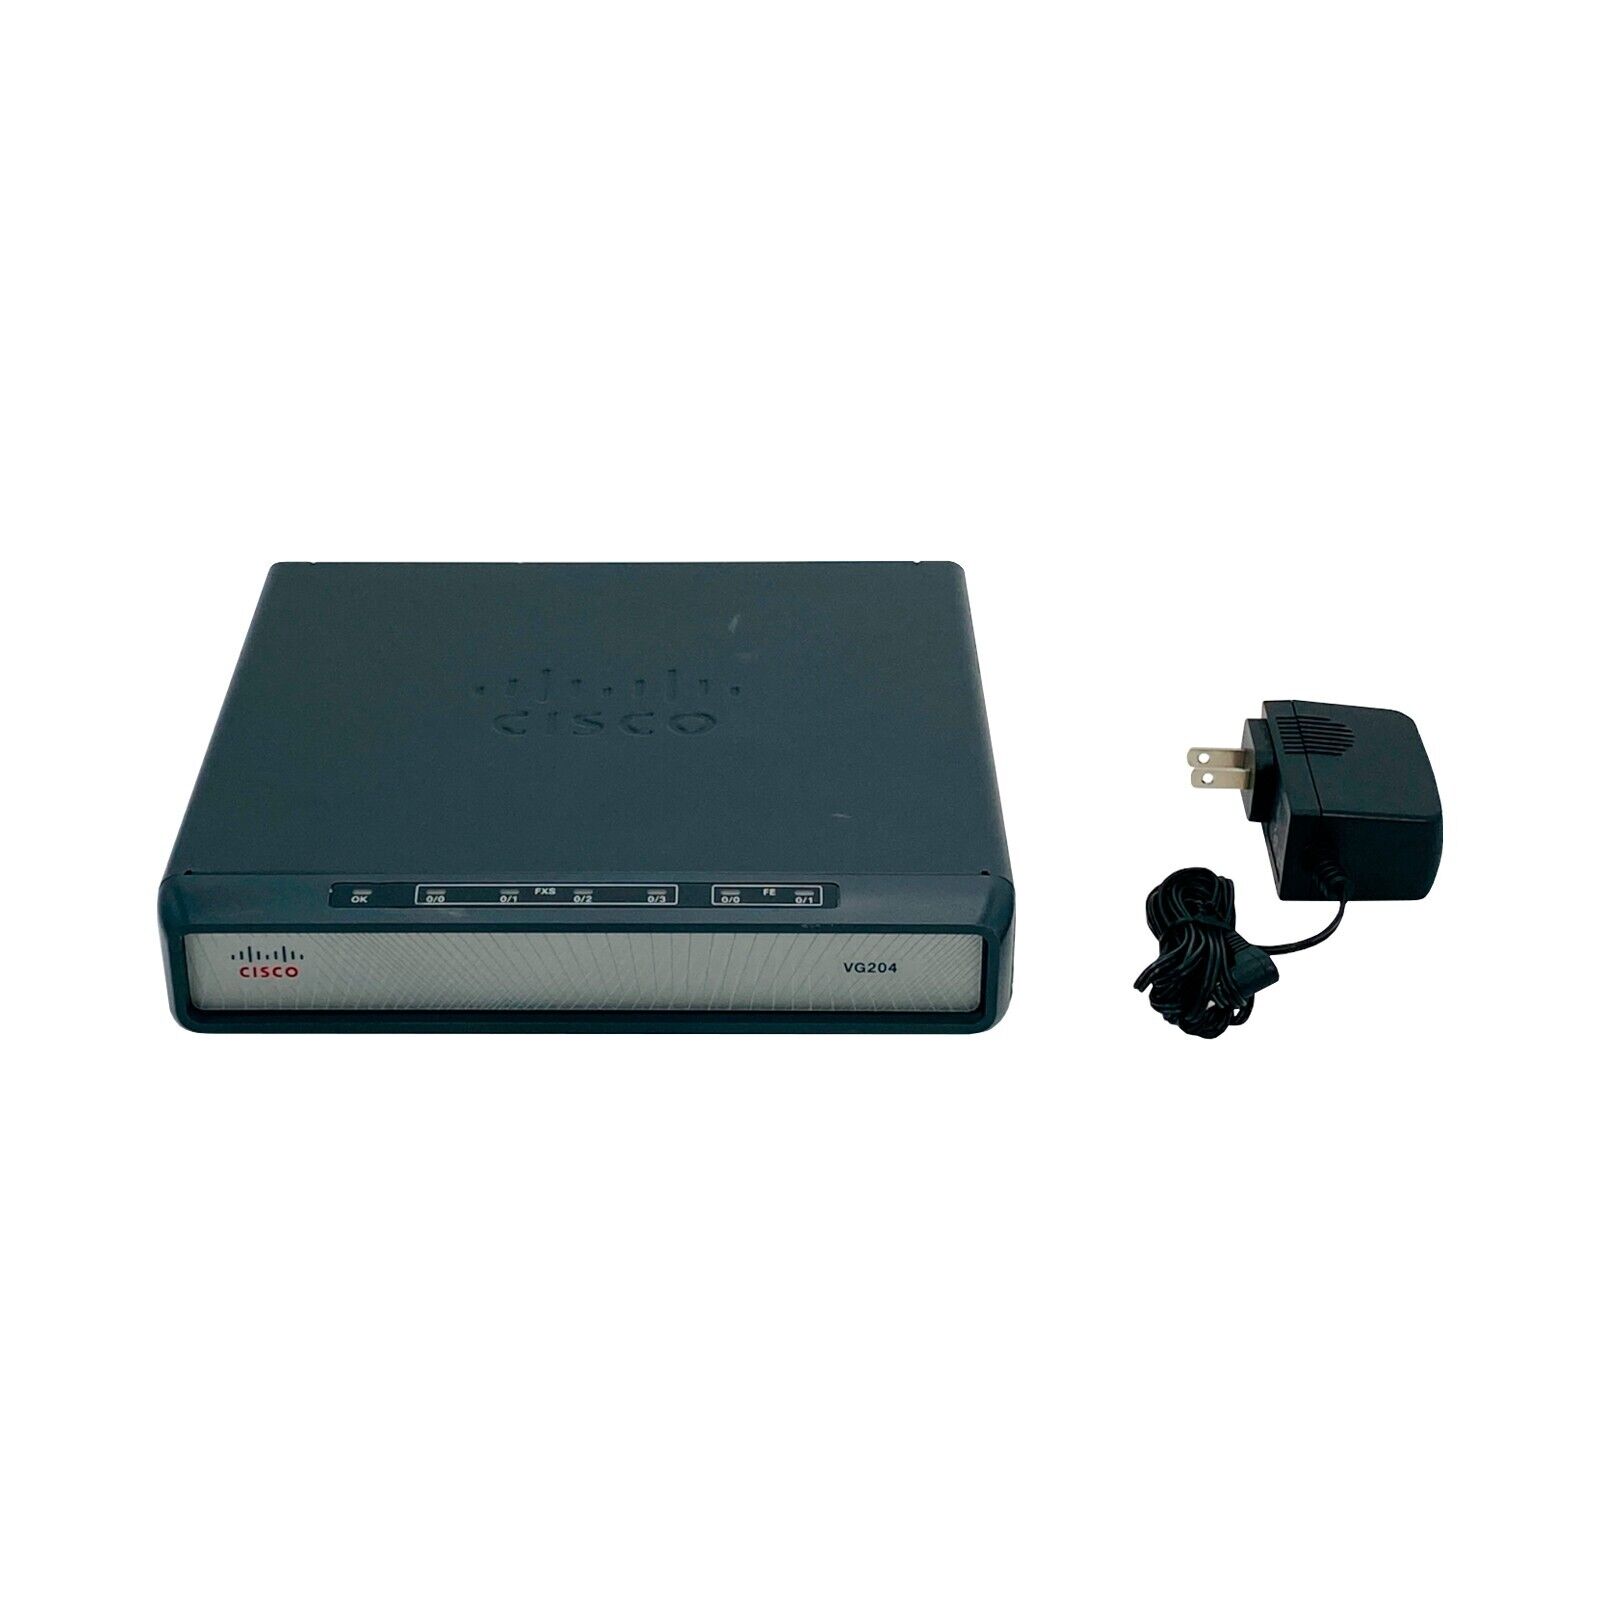 Cisco VG204 4-Port Analog Voice Phone Gateway with AC Adapter tt